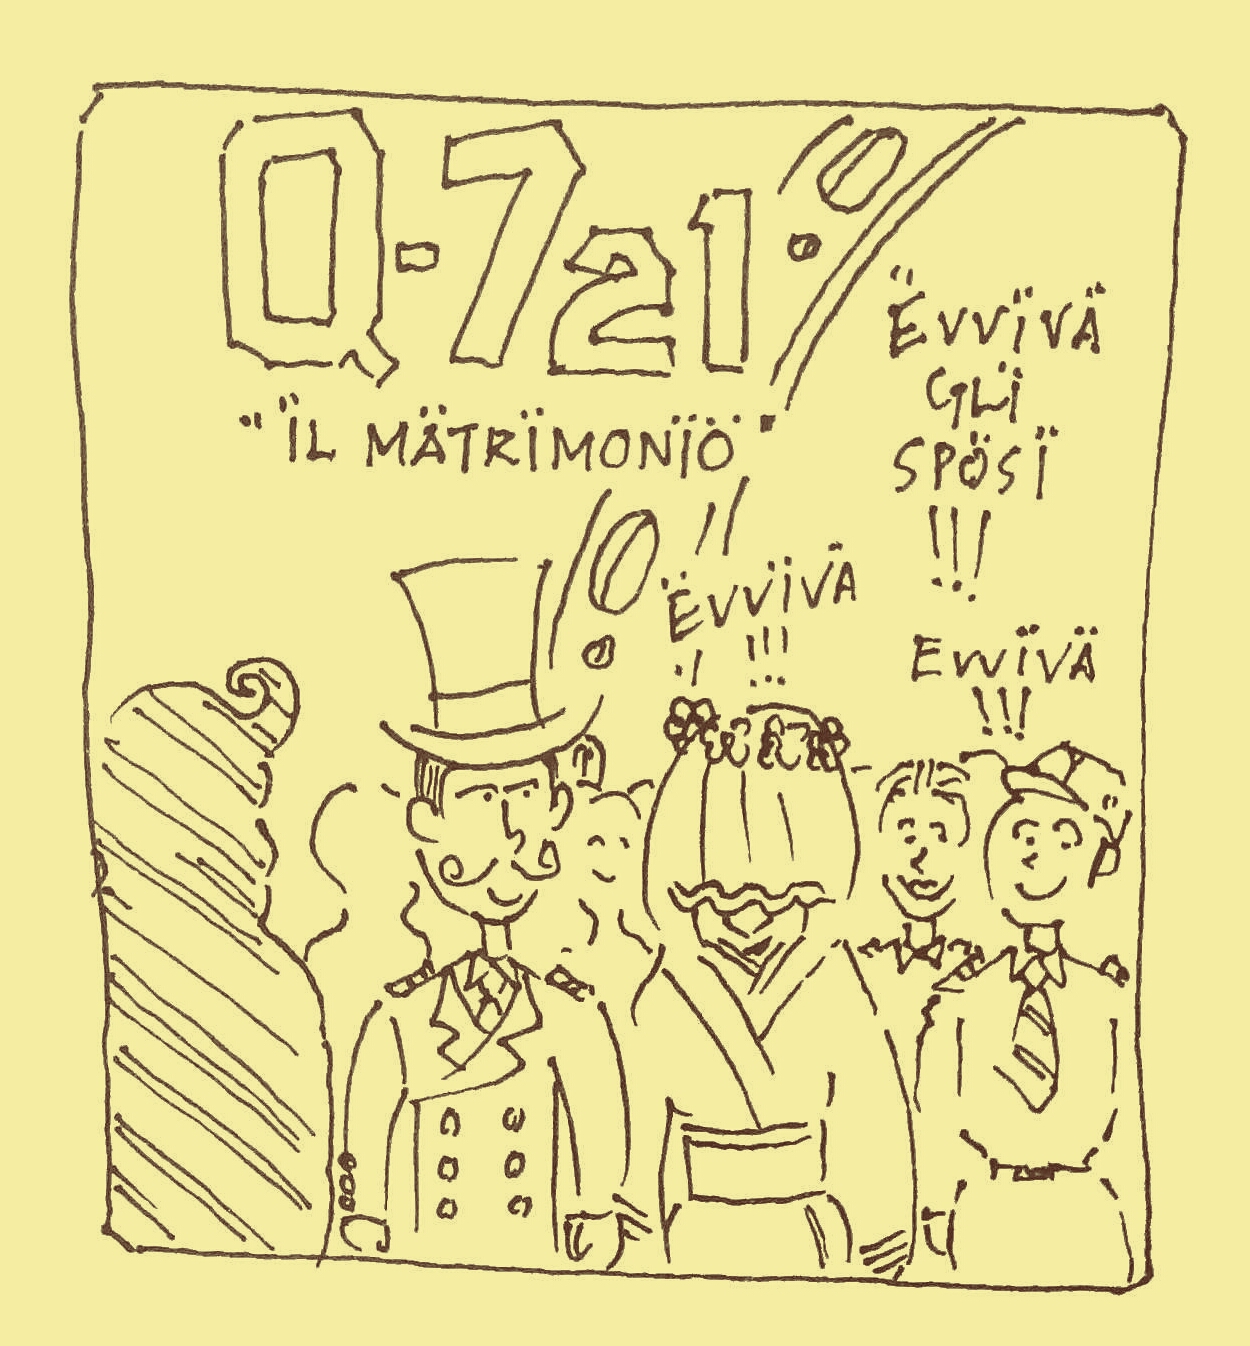 The wedding - Il matrimonio - Q-721 motion comics & fumetti on line - モーションコミック、4コマ漫画